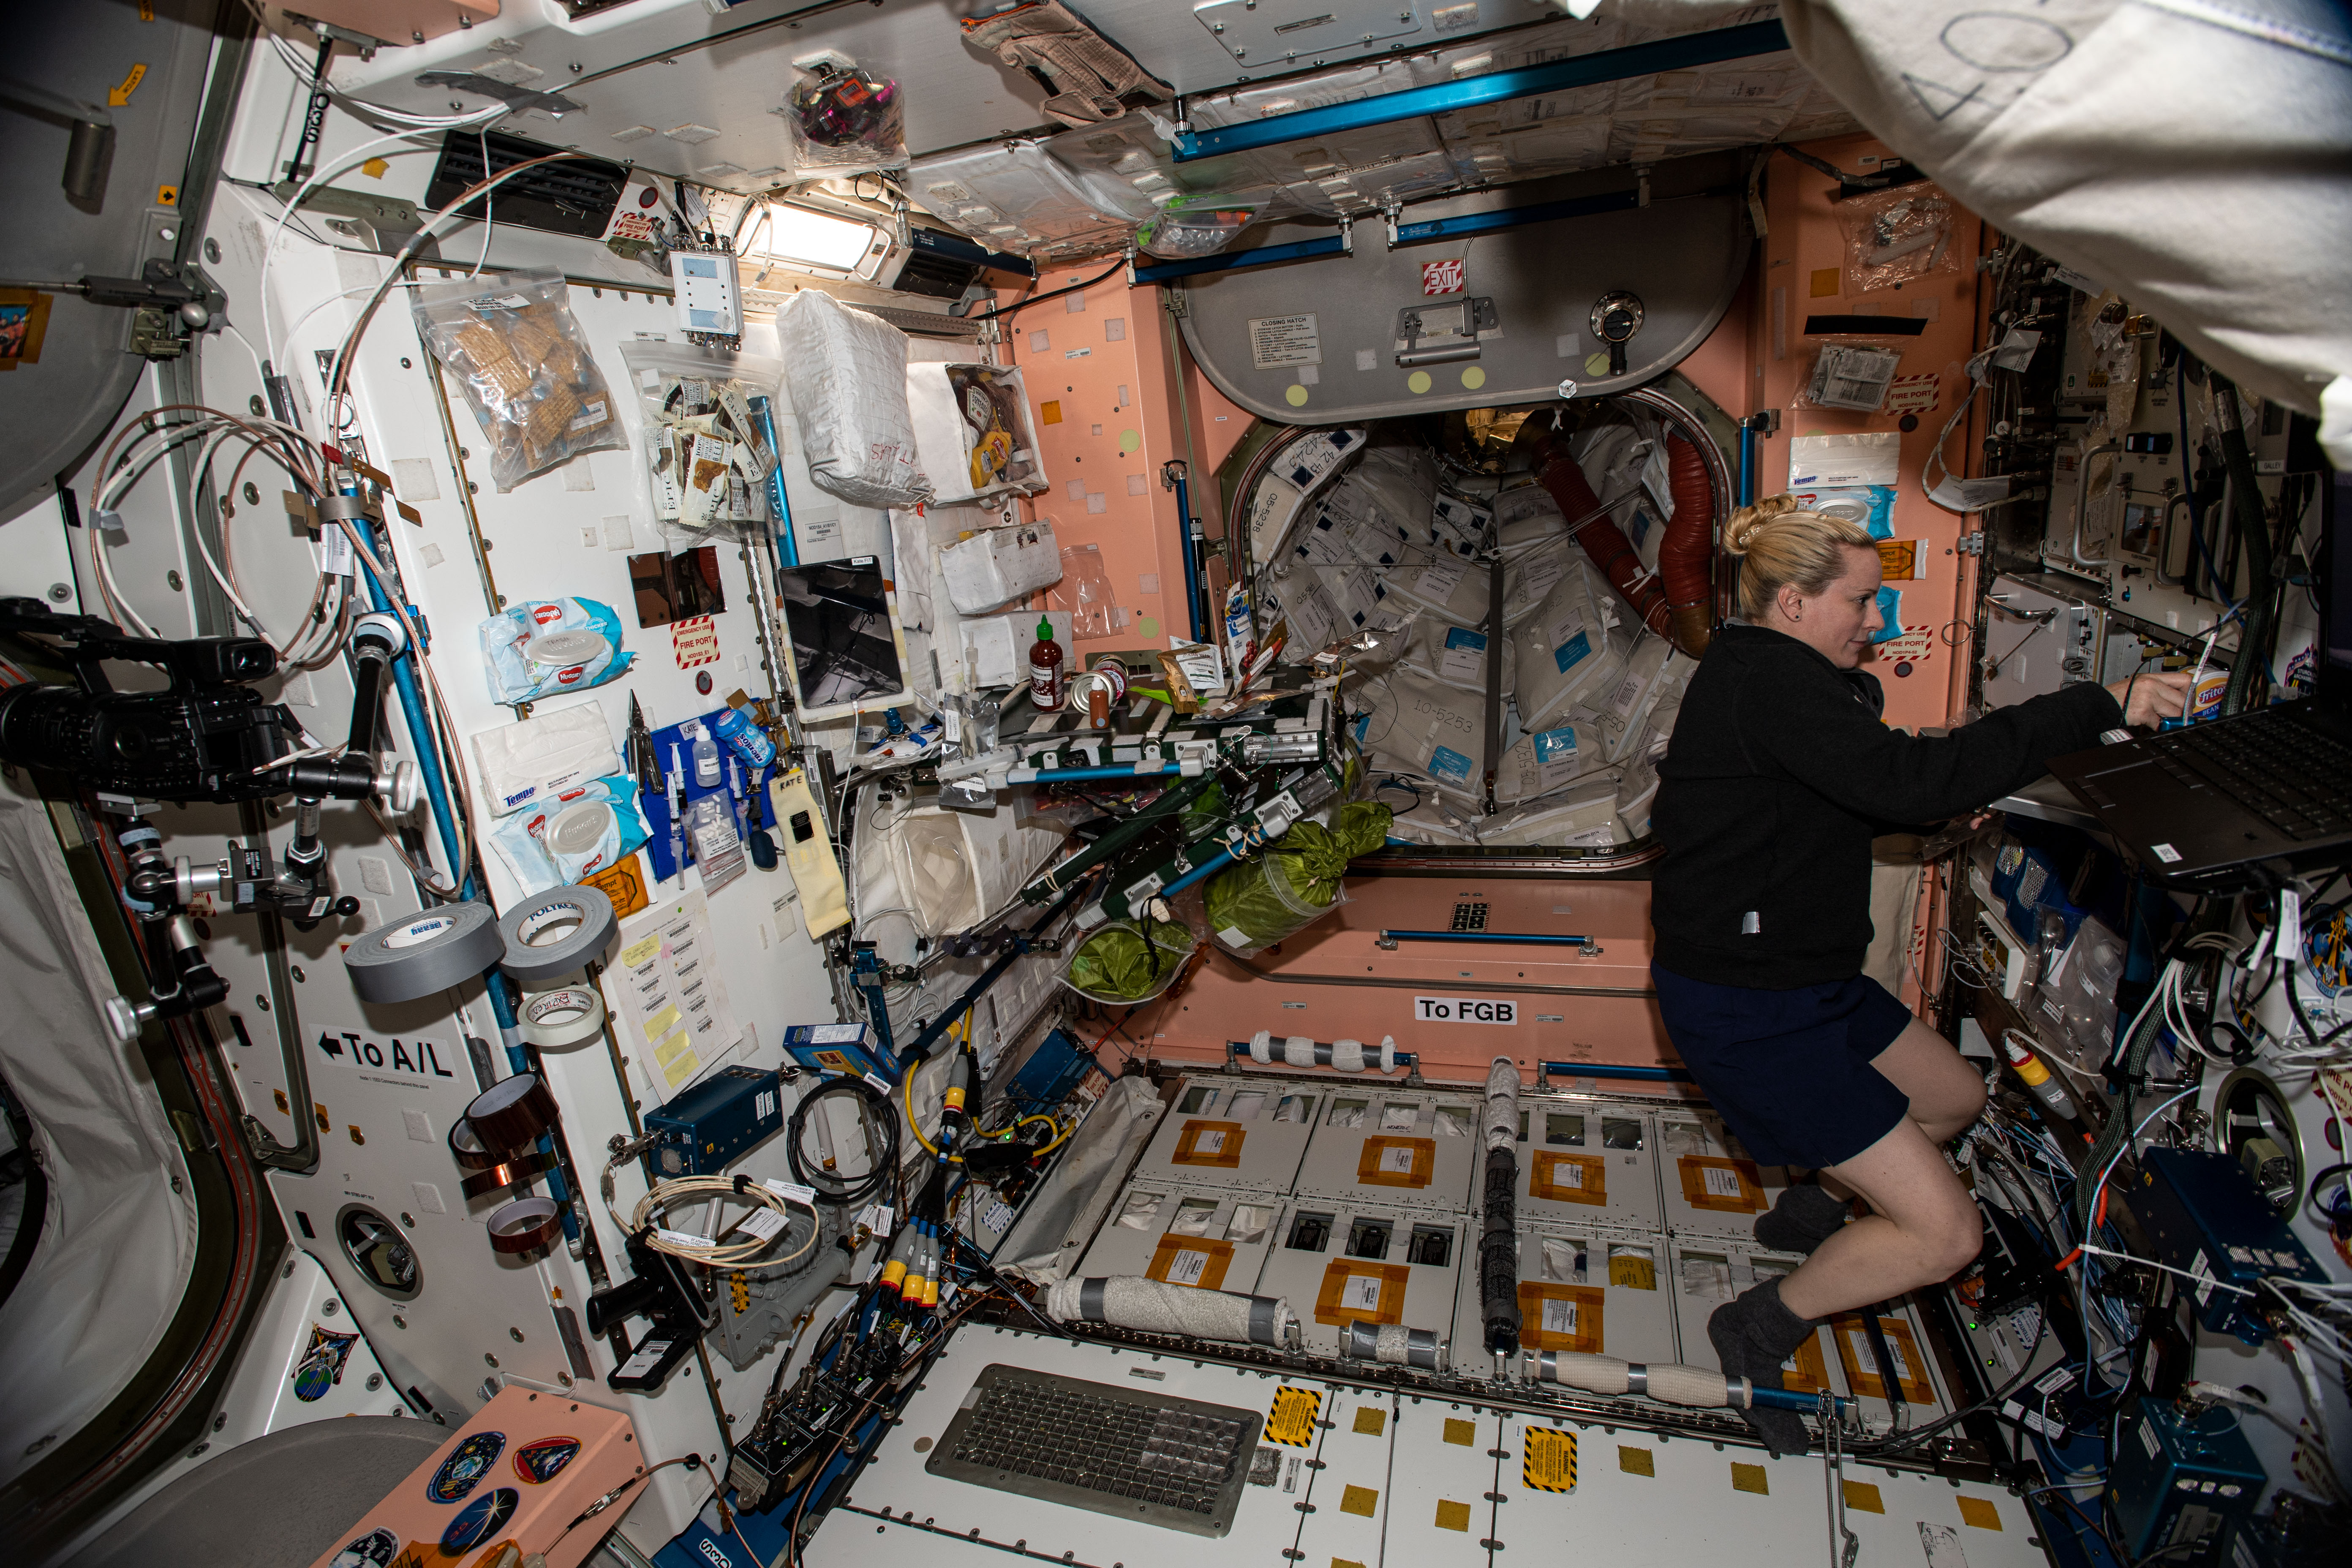 Expedition 64 NASA astronaut Kathleen H. “Kate” Rubins prepares the Thanksgiving dinner